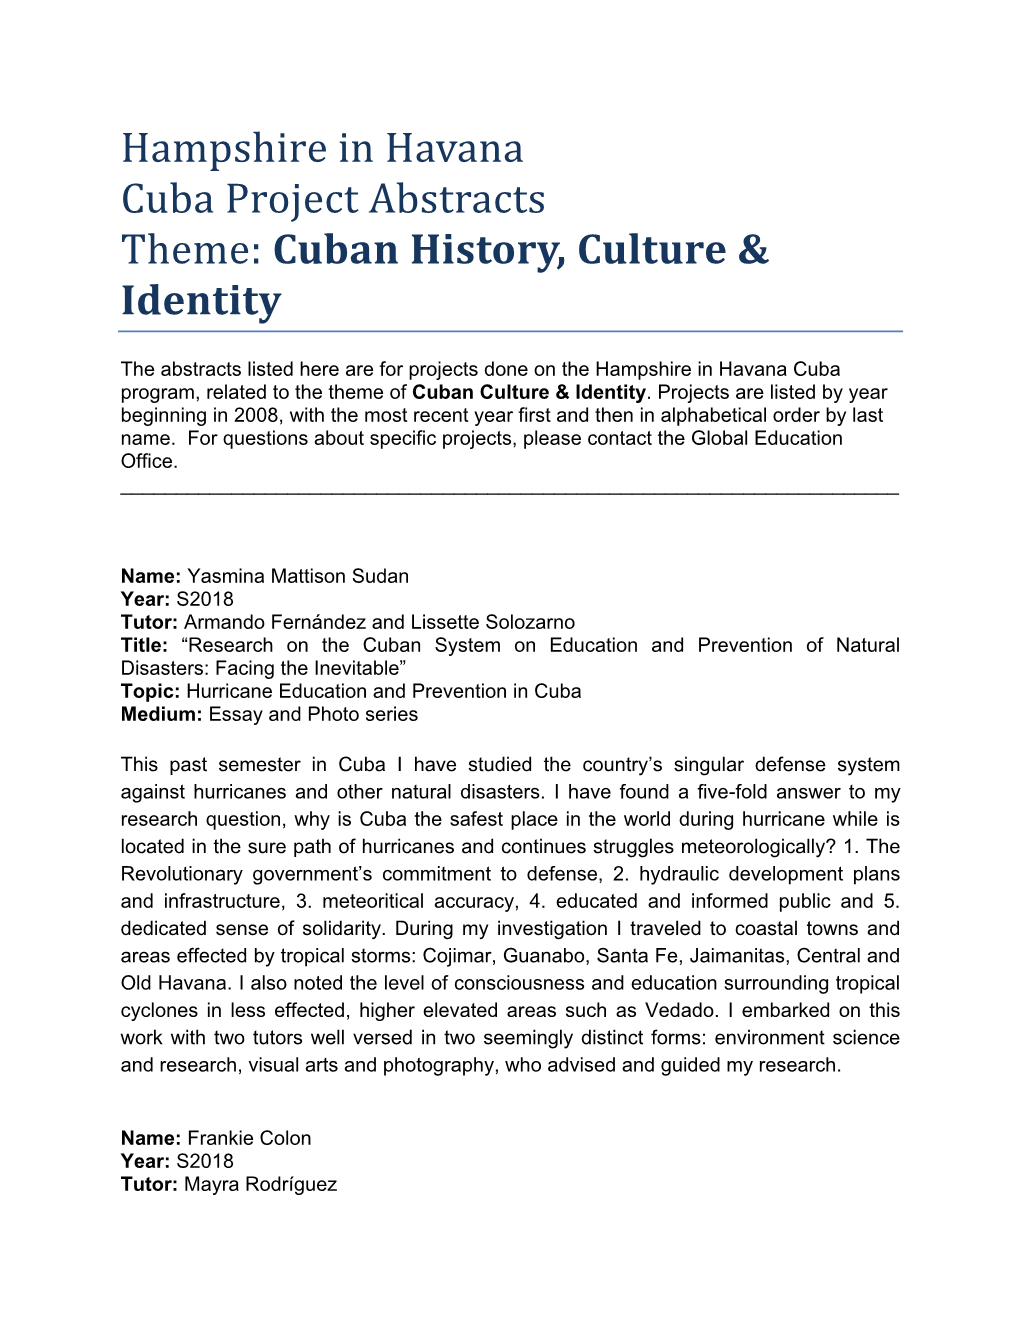 Cuban History, Culture & Identity